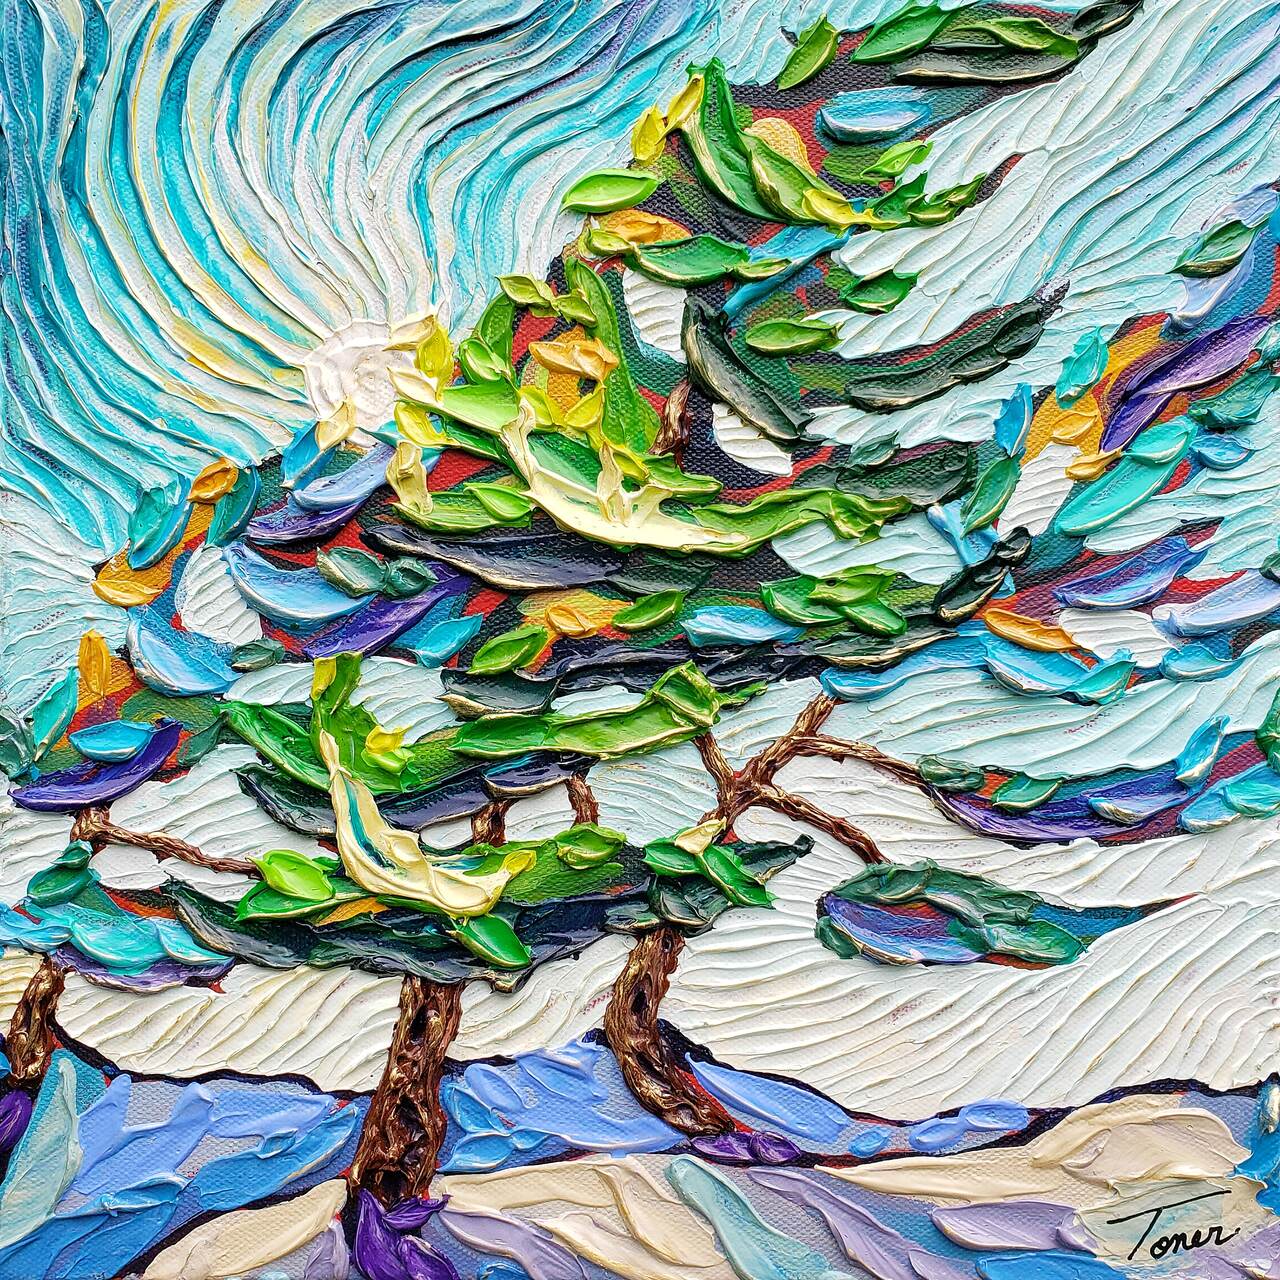 Windswept View, by Ashley Toner. Acrylic on canvas, 12 x 12. $300